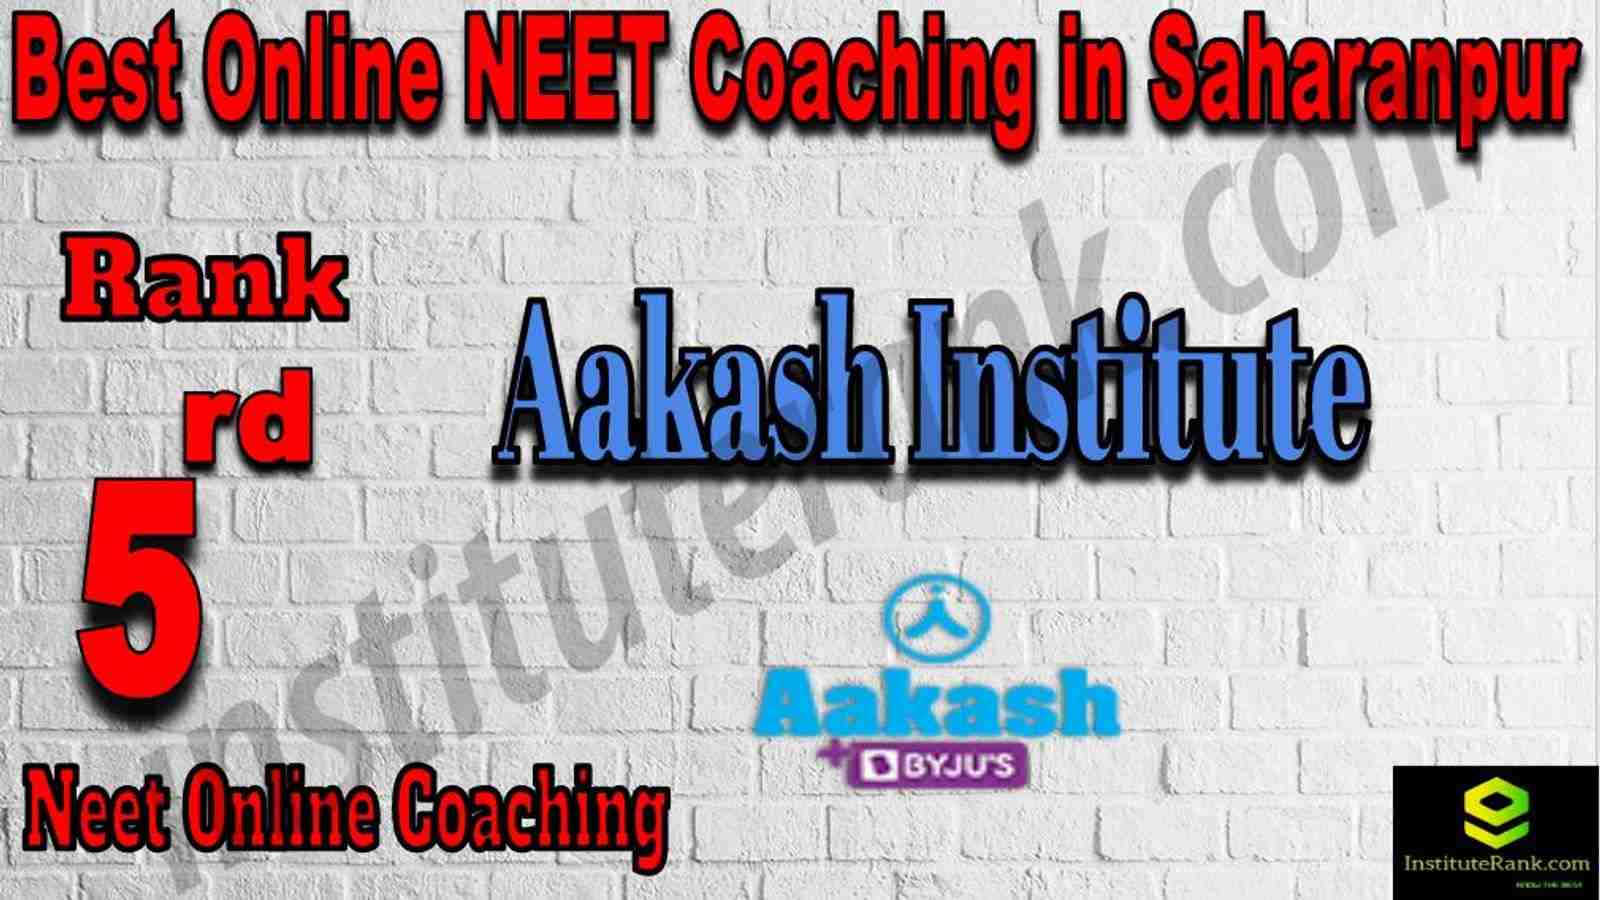 5th Best Online Neet Coaching in Saharanpur